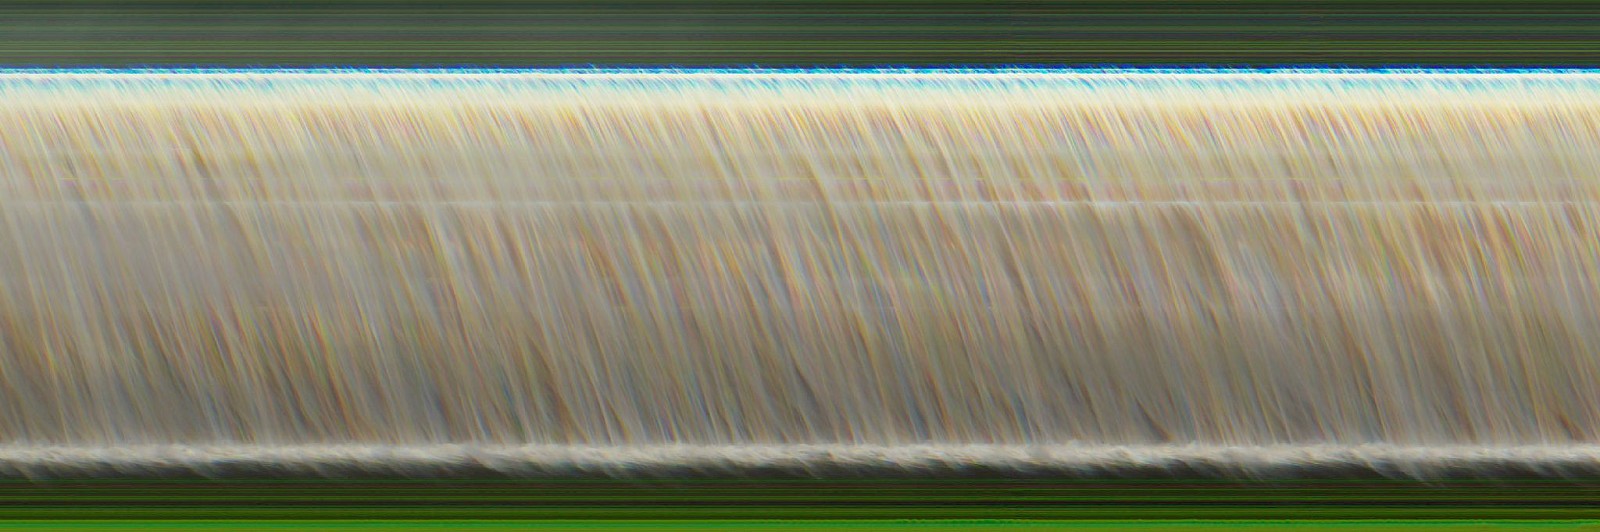 Jay Mark Johnson, AKAKA KASKATA #4, 2010 Akaka Falls HI
archival pigment on paper, mounted on aluminum, 40 x 120 in. (101.6 x 304.8 cm)